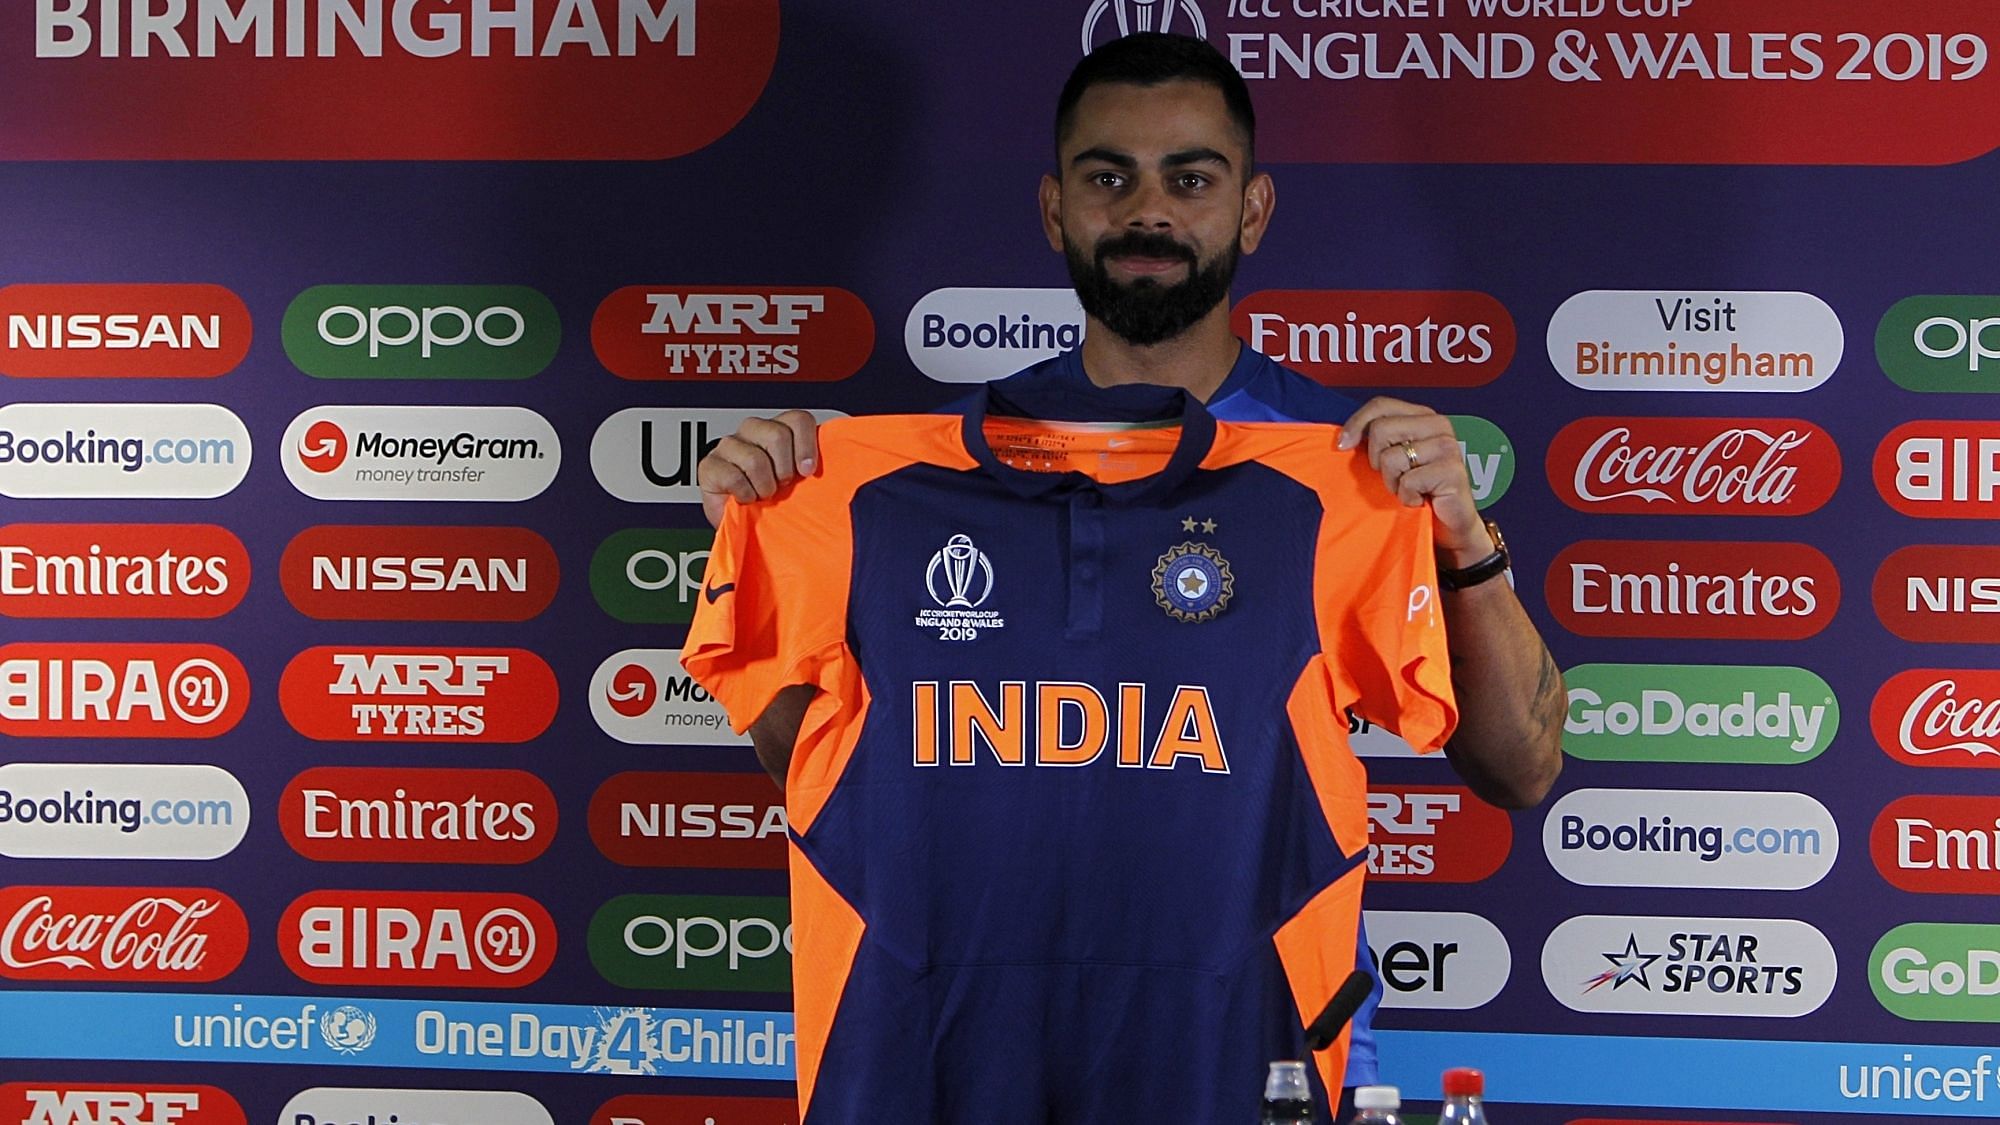 Virat Kohli reveals the ‘away kit’ of team India ahead of England match.